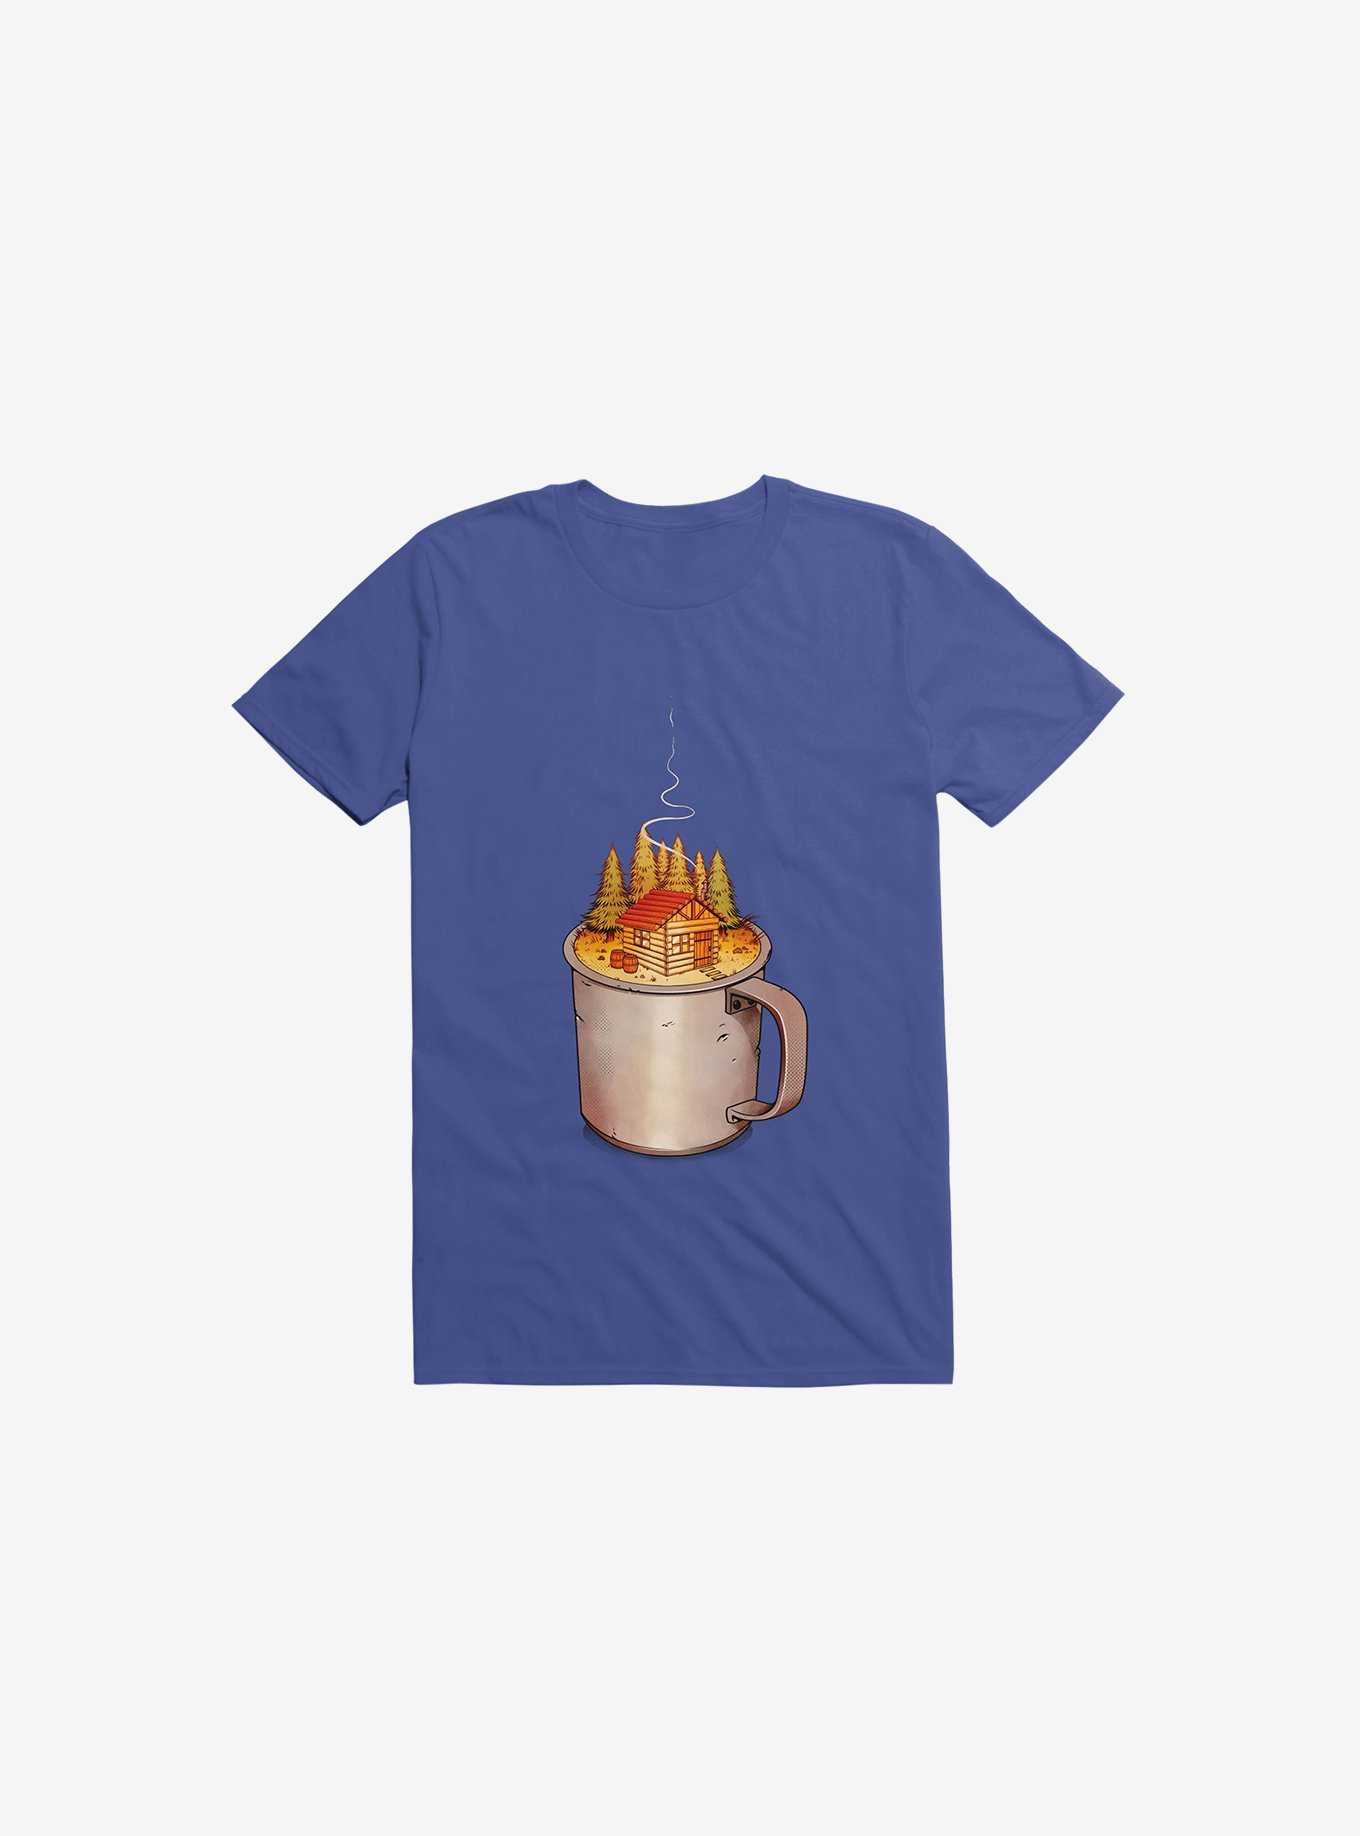 My Camp Of Tea Royal Blue T-Shirt, , hi-res